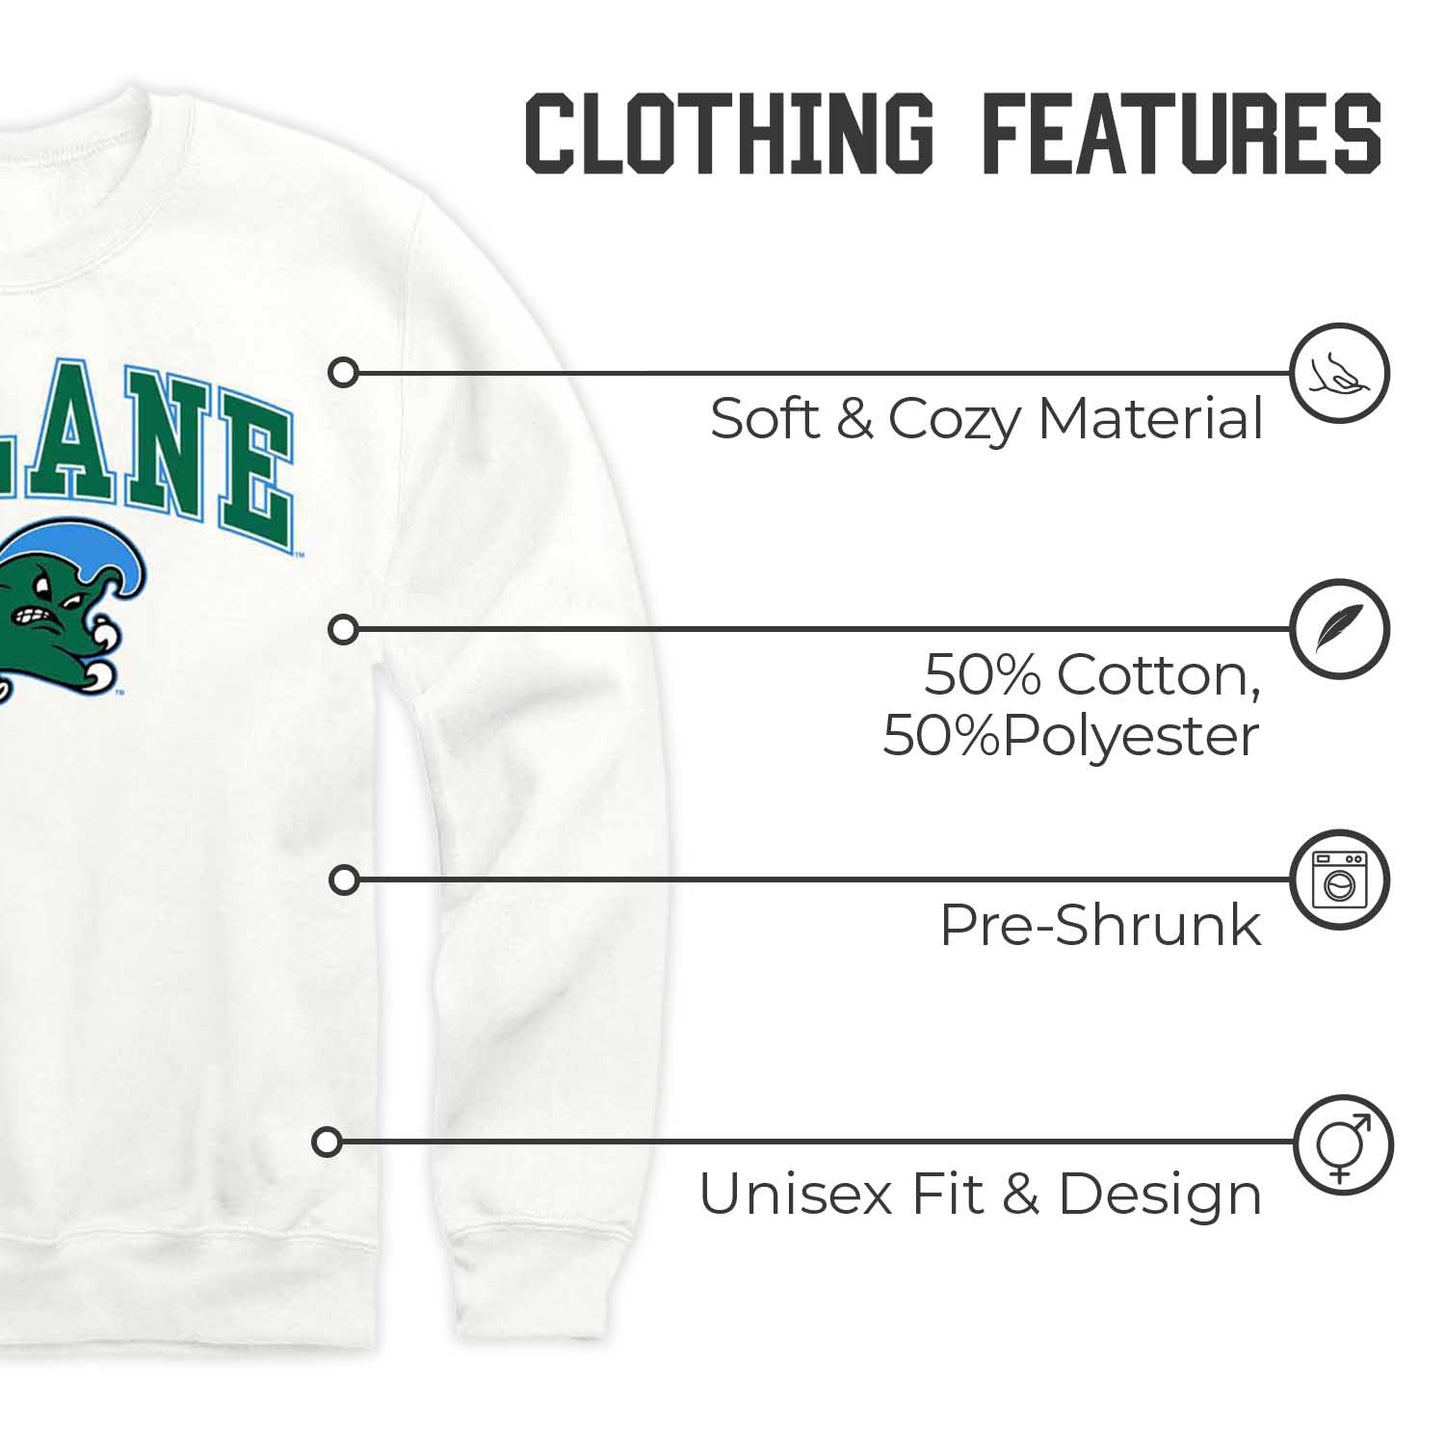 Tulane Green Wave Adult Arch & Logo Soft Style Gameday Crewneck Sweatshirt - White